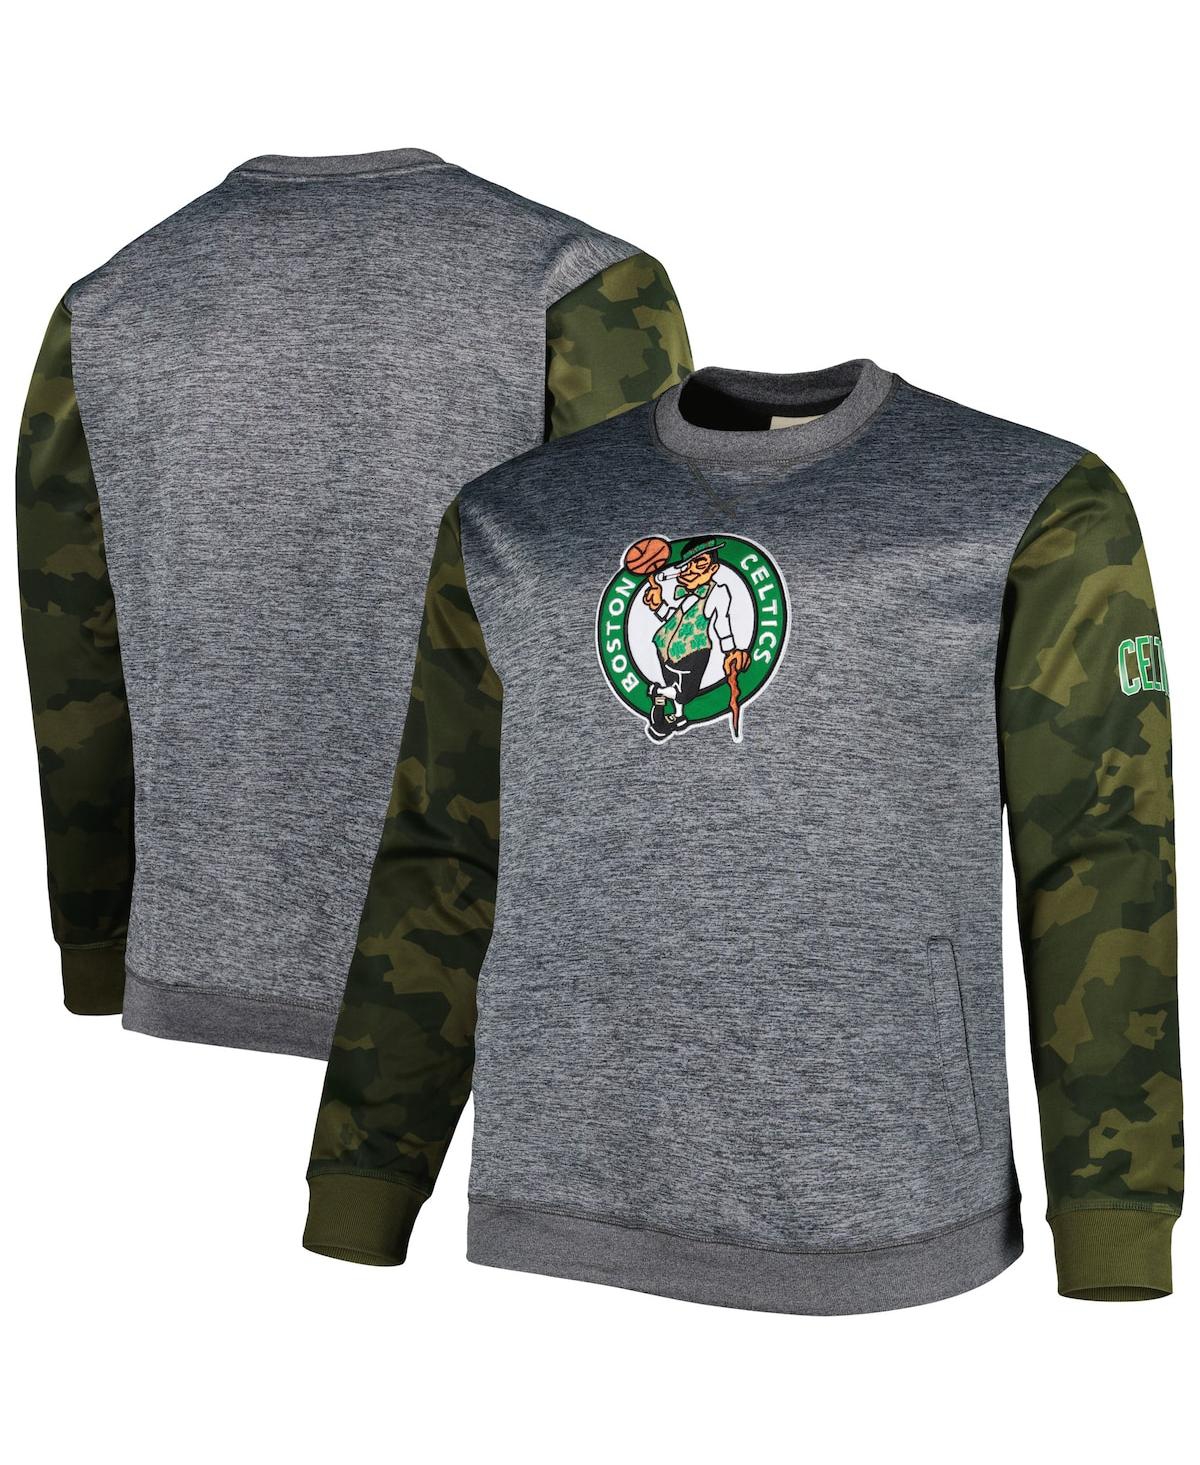 Shop Fanatics Men's Heather Charcoal Boston Celtics Big And Tall Camo Stitched Sweatshirt